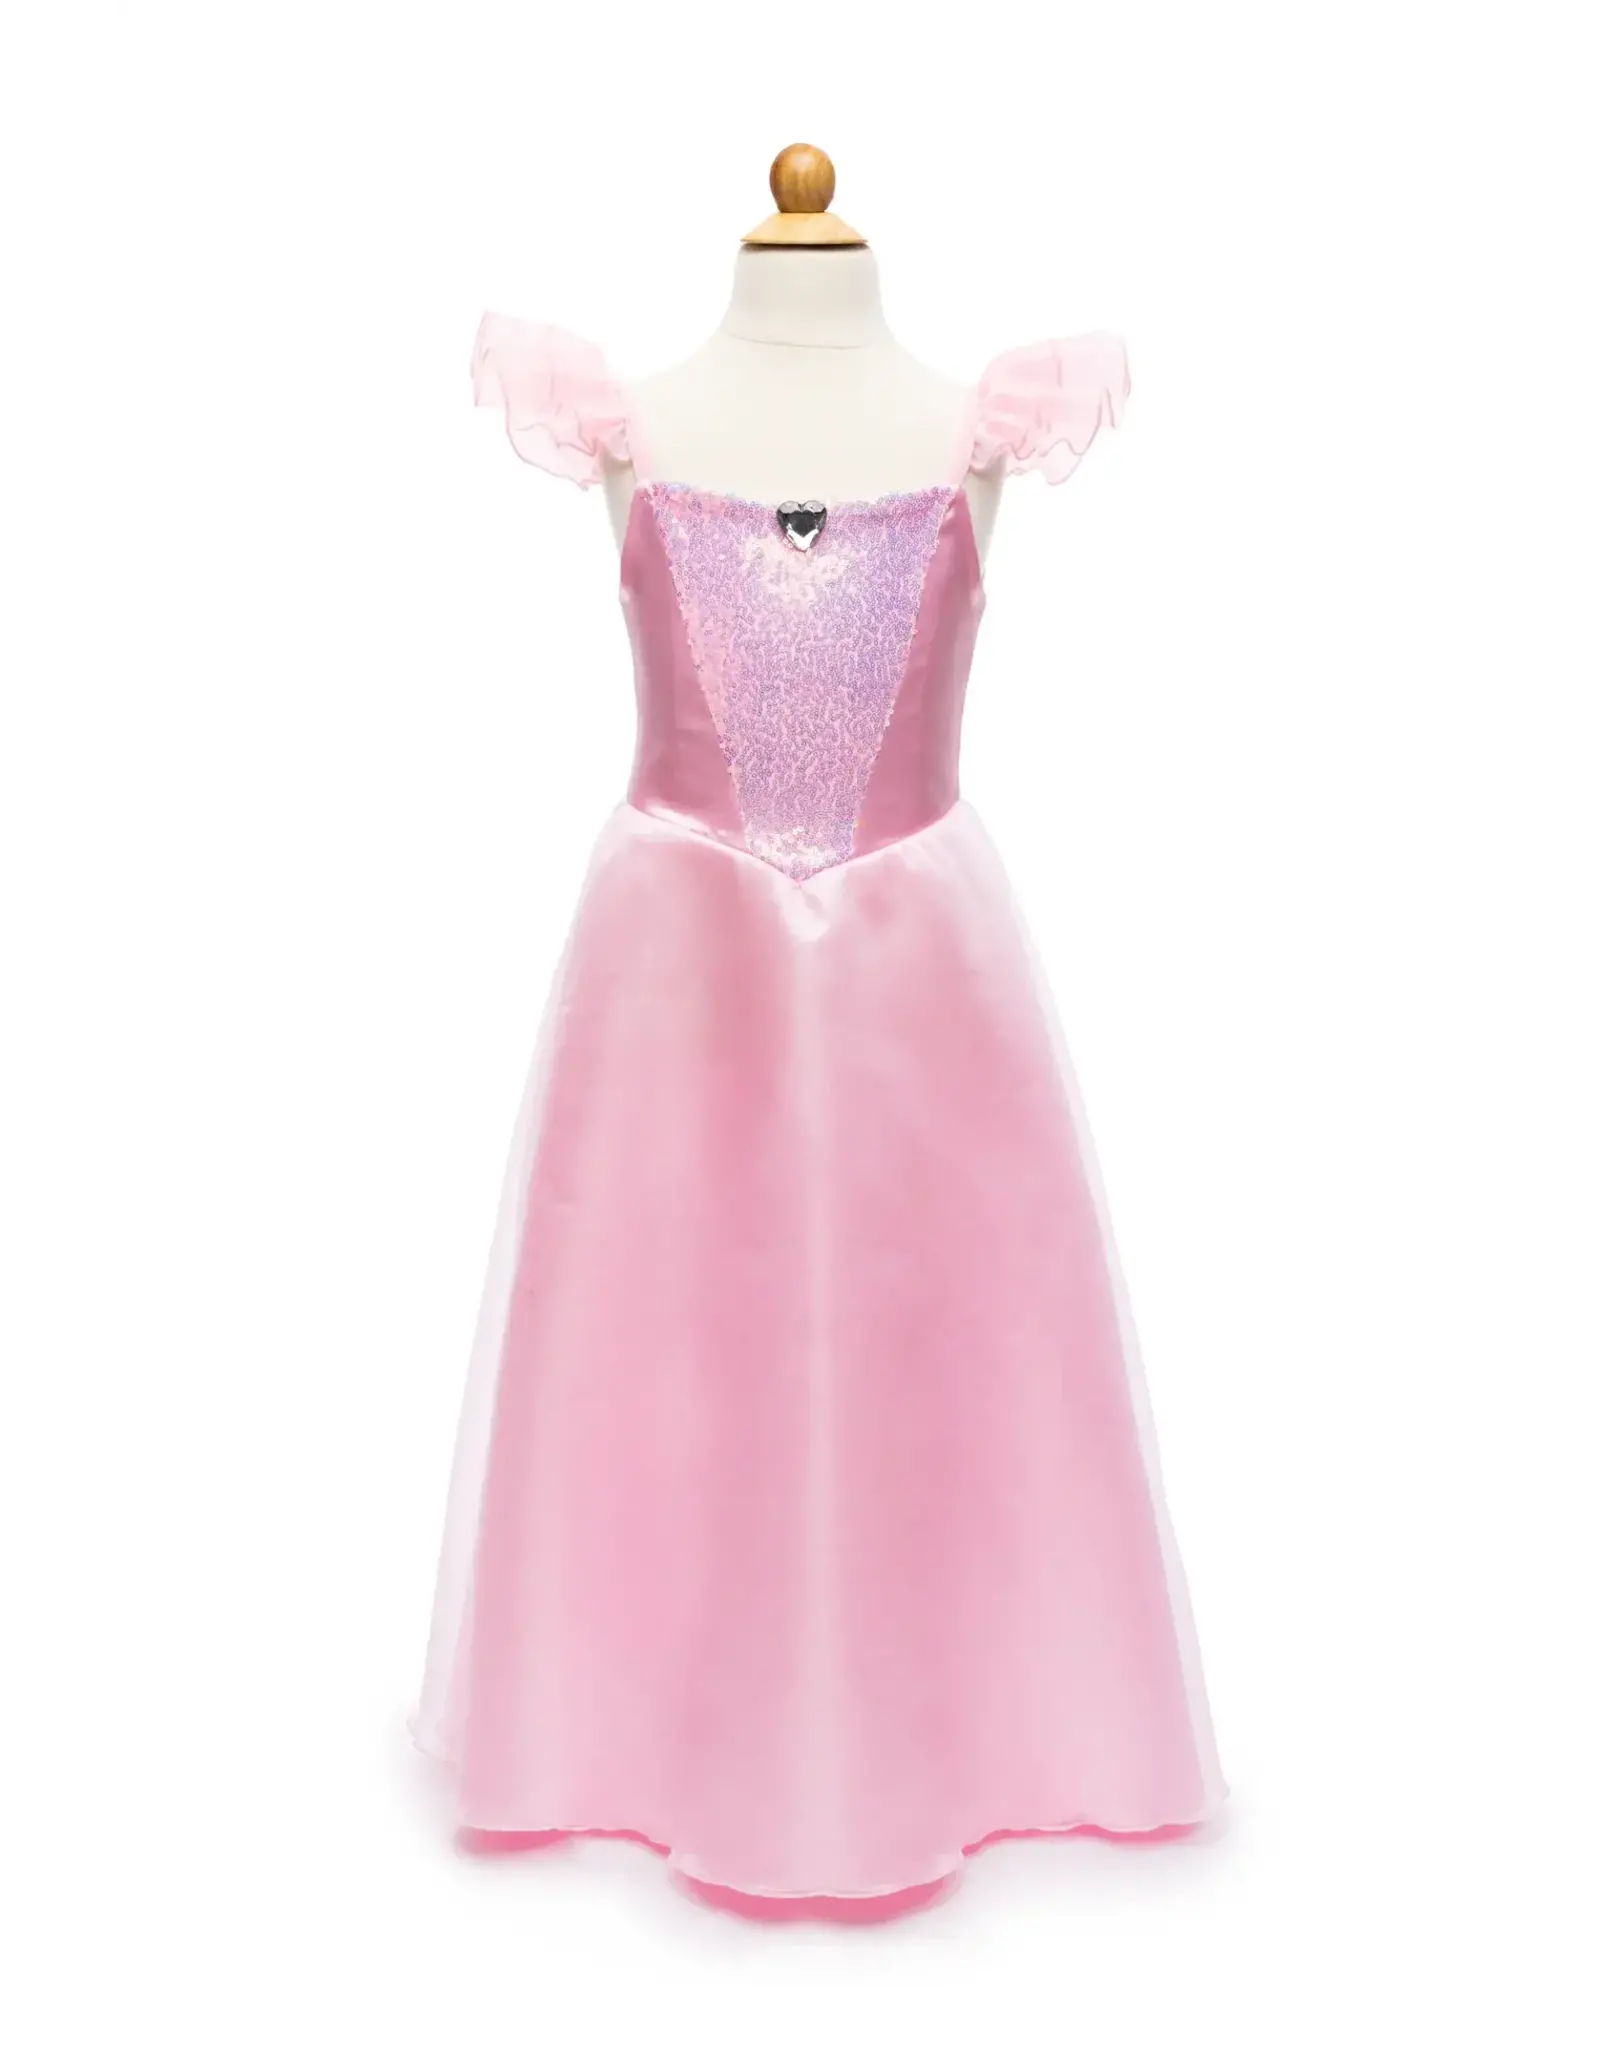 Great Pretenders Party Princess Dress  Light Pink Size 7-8